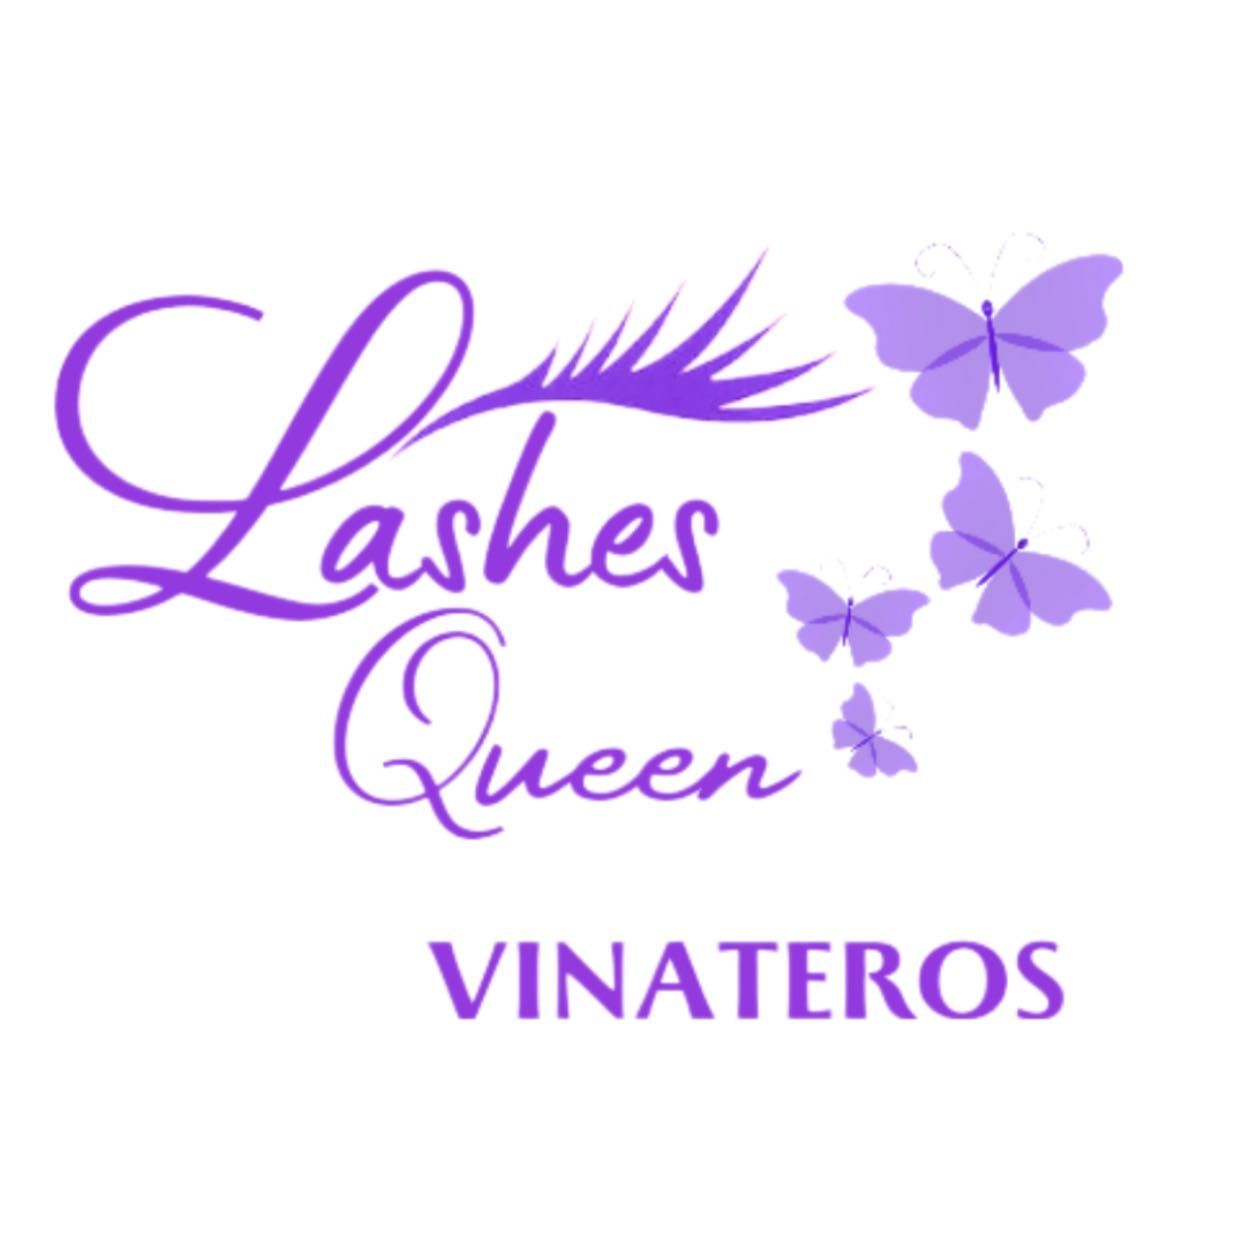 Lashes Queen Vinateros, Calle del Camino de los Vinateros, 146, Local 98 Lashes Madrid, 28030, Madrid